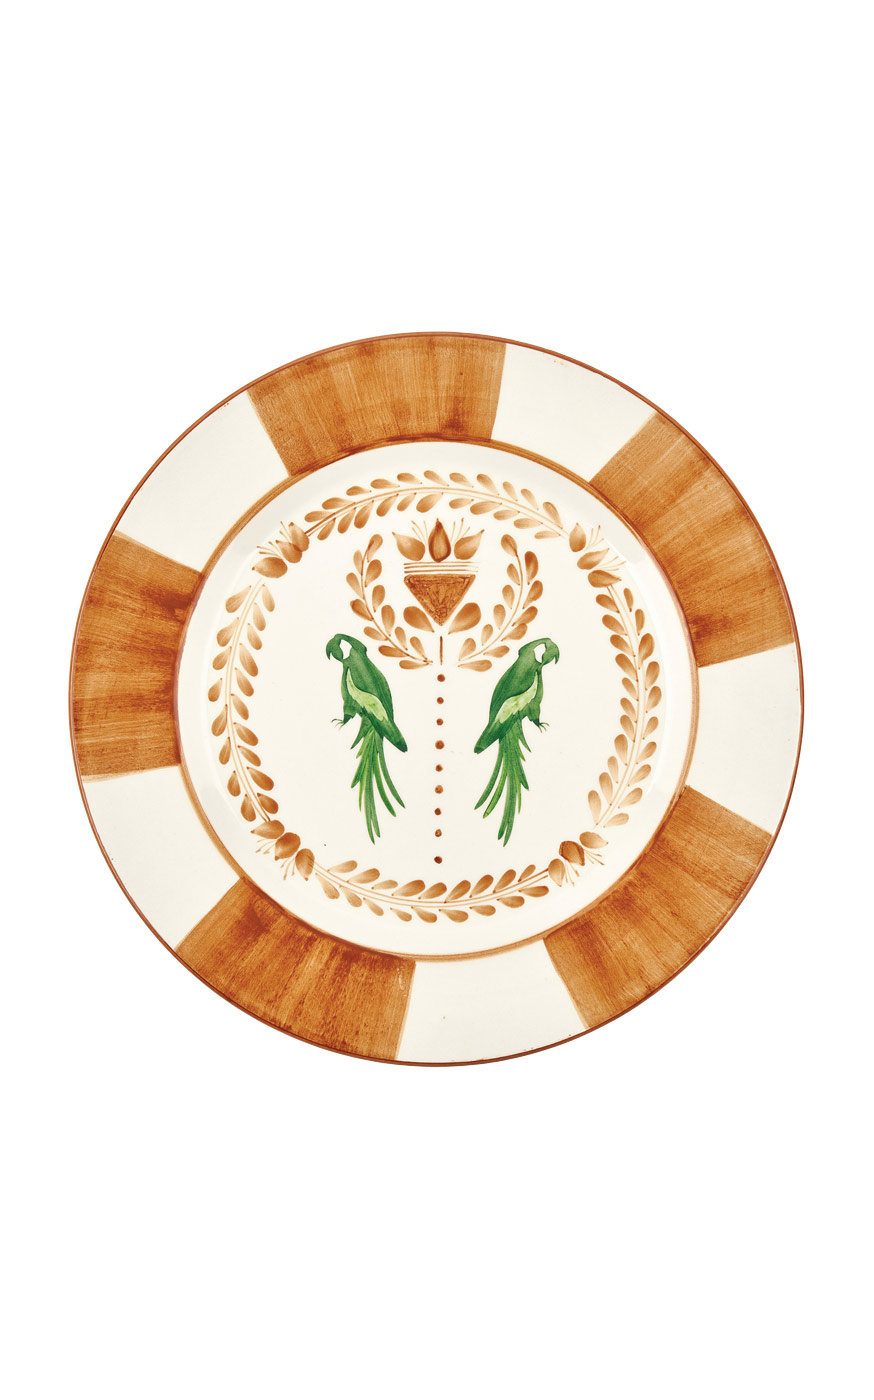 66 Johanna Ortiz, Macao Ceramic Dinner Plates, Modaoperandi.com